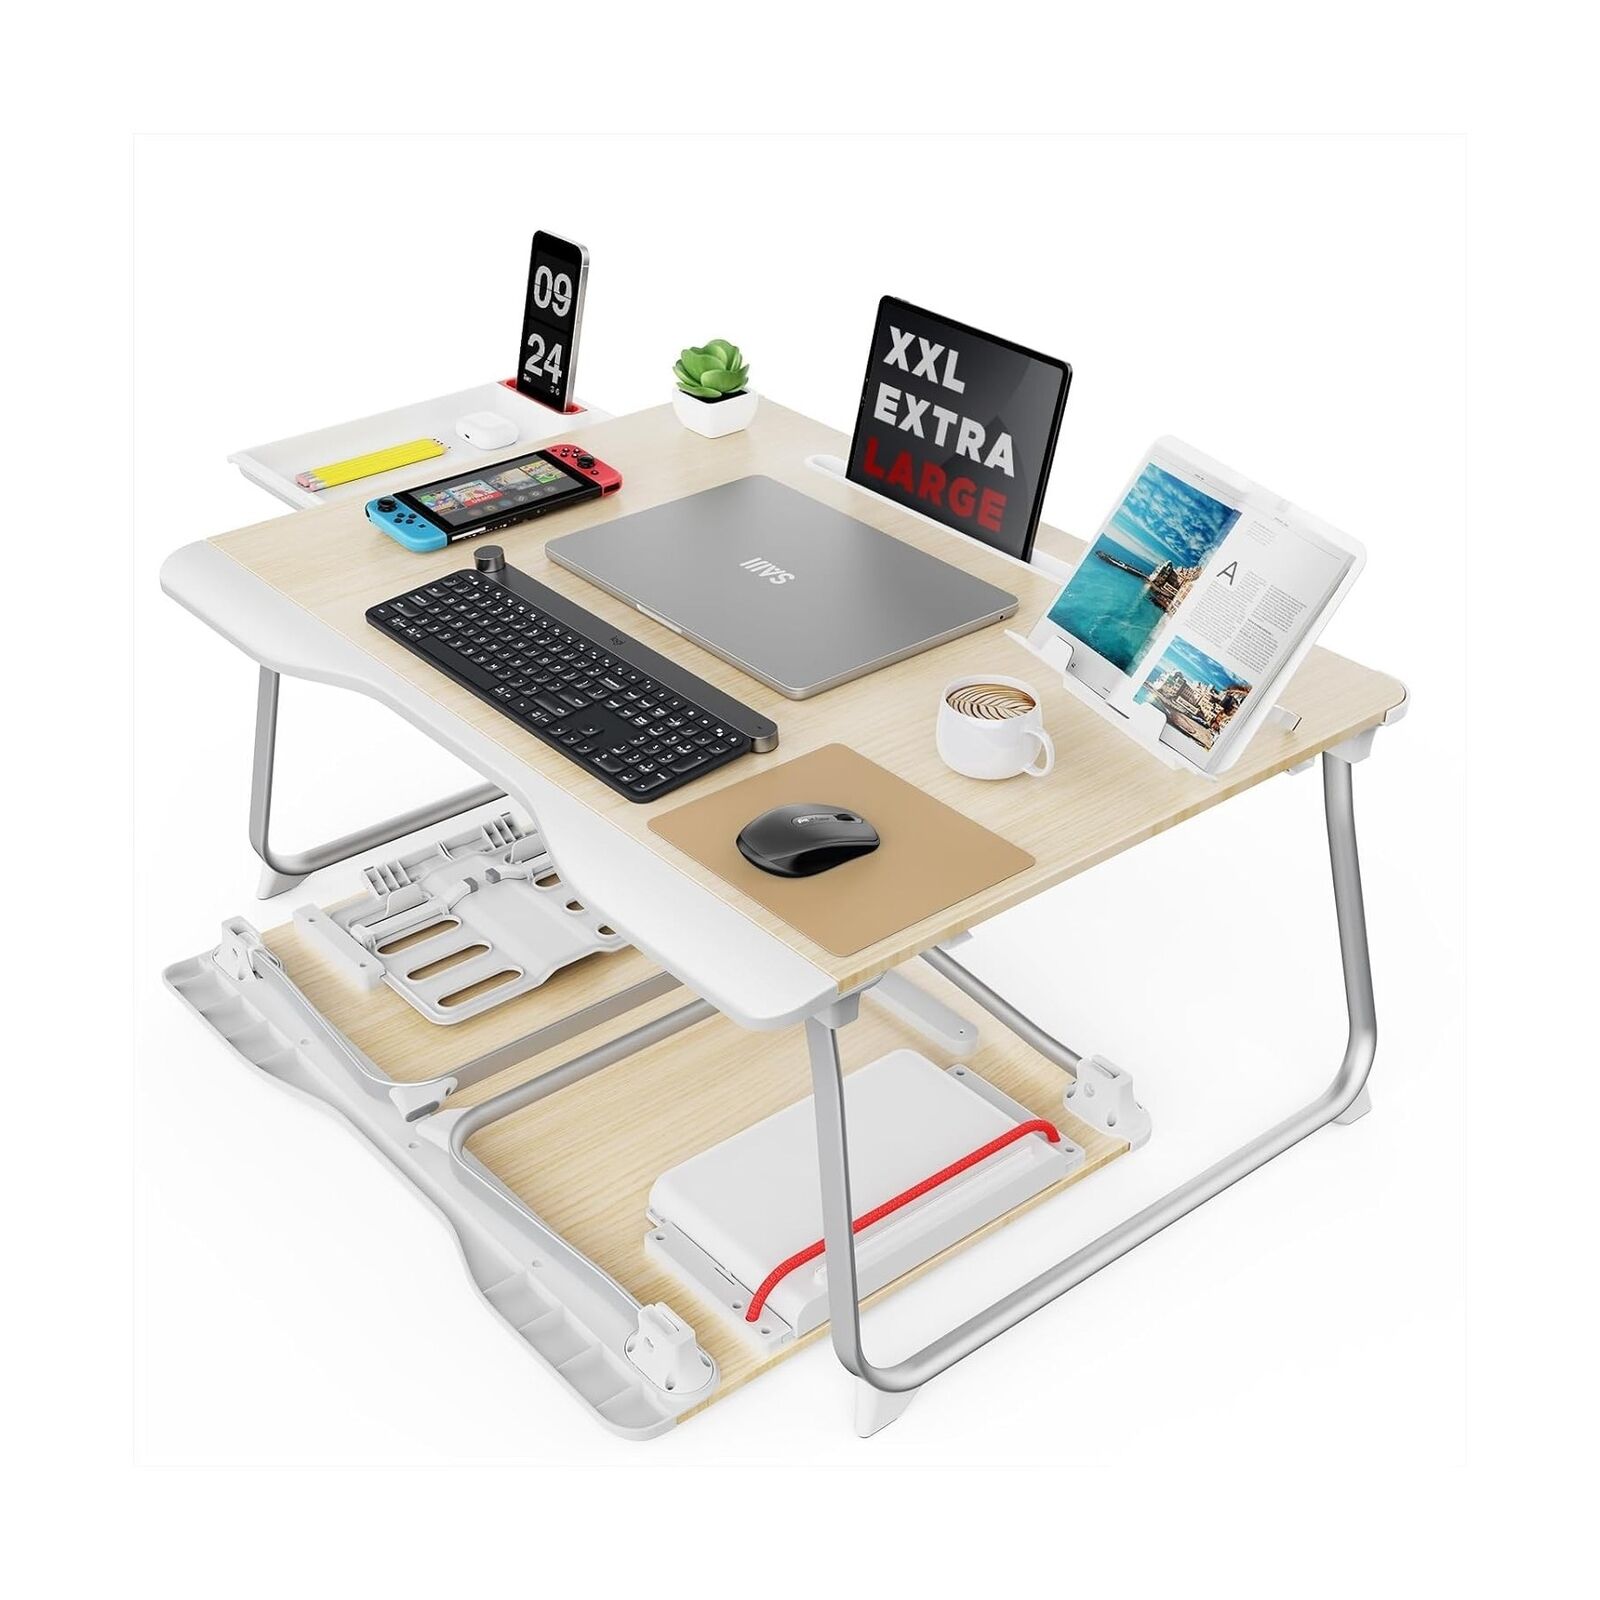 SAIJI Folding Bed Desk for Laptop, Eating Breakfast, Writing, Gaming, Extra L...